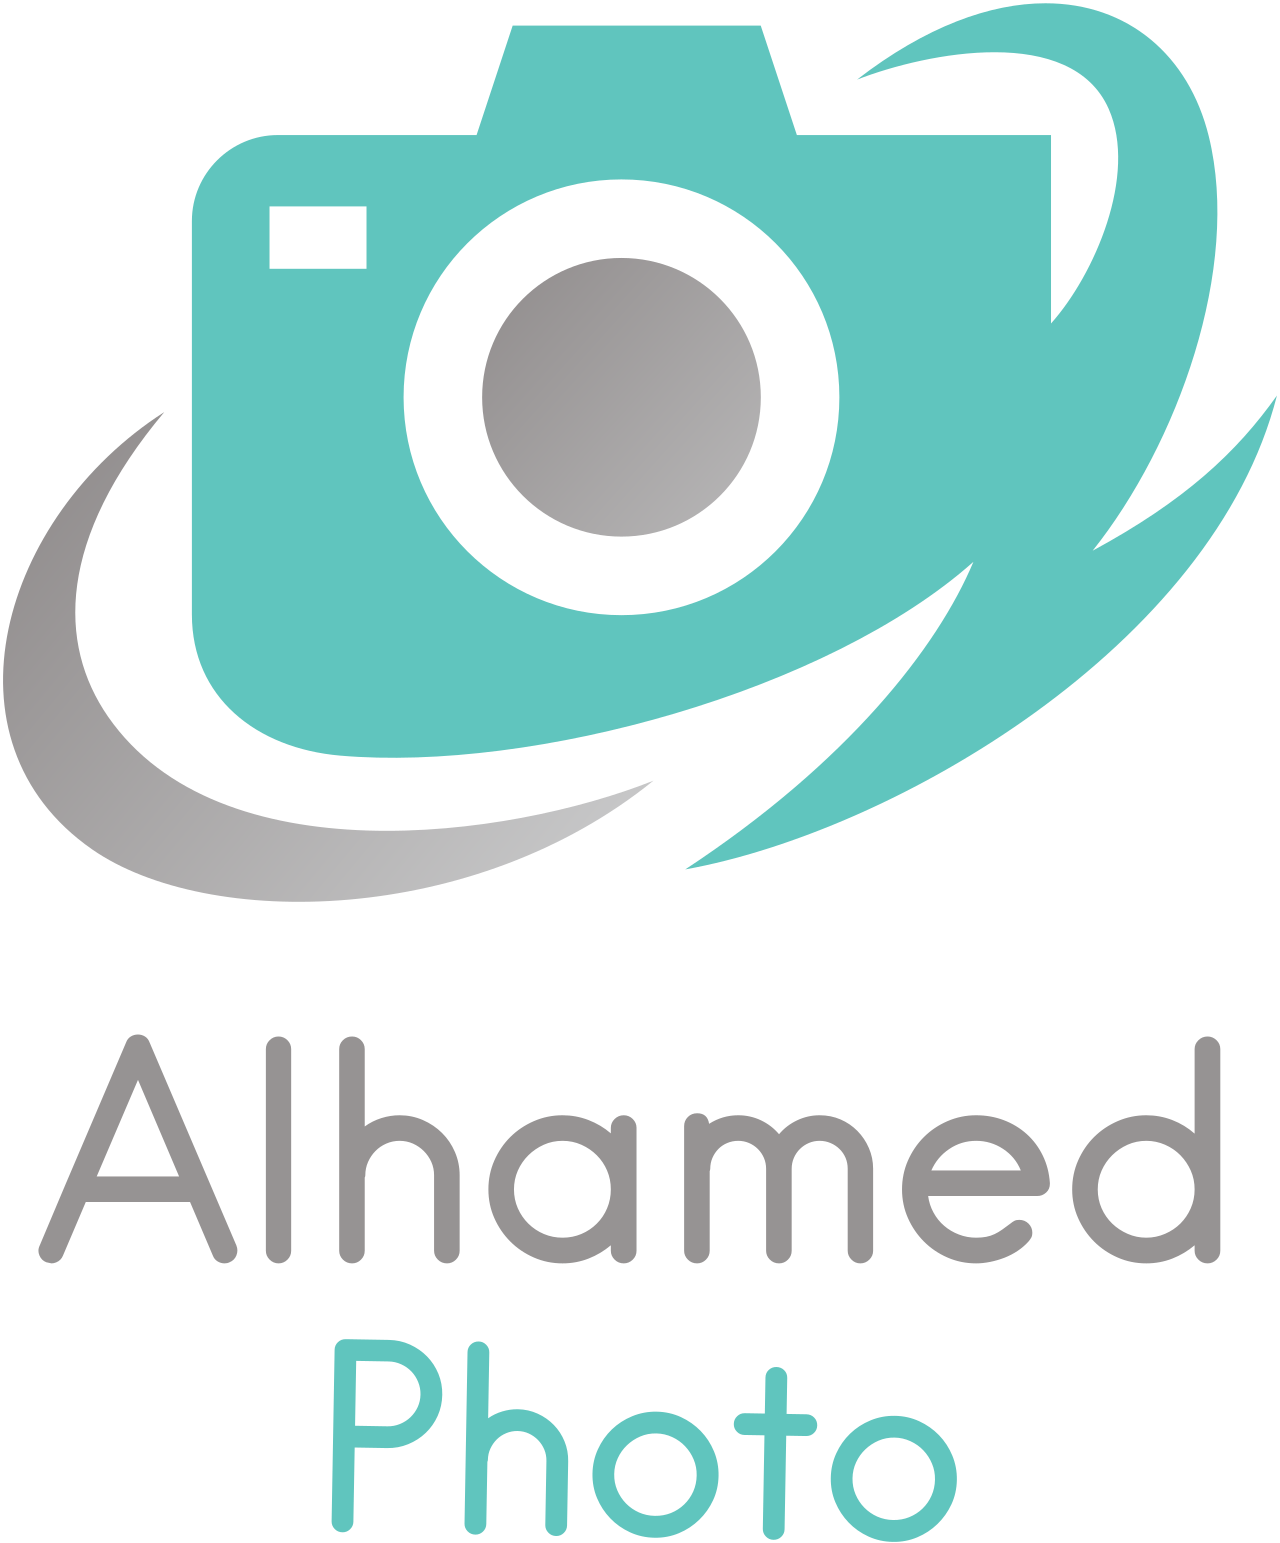 Alhamed's logo